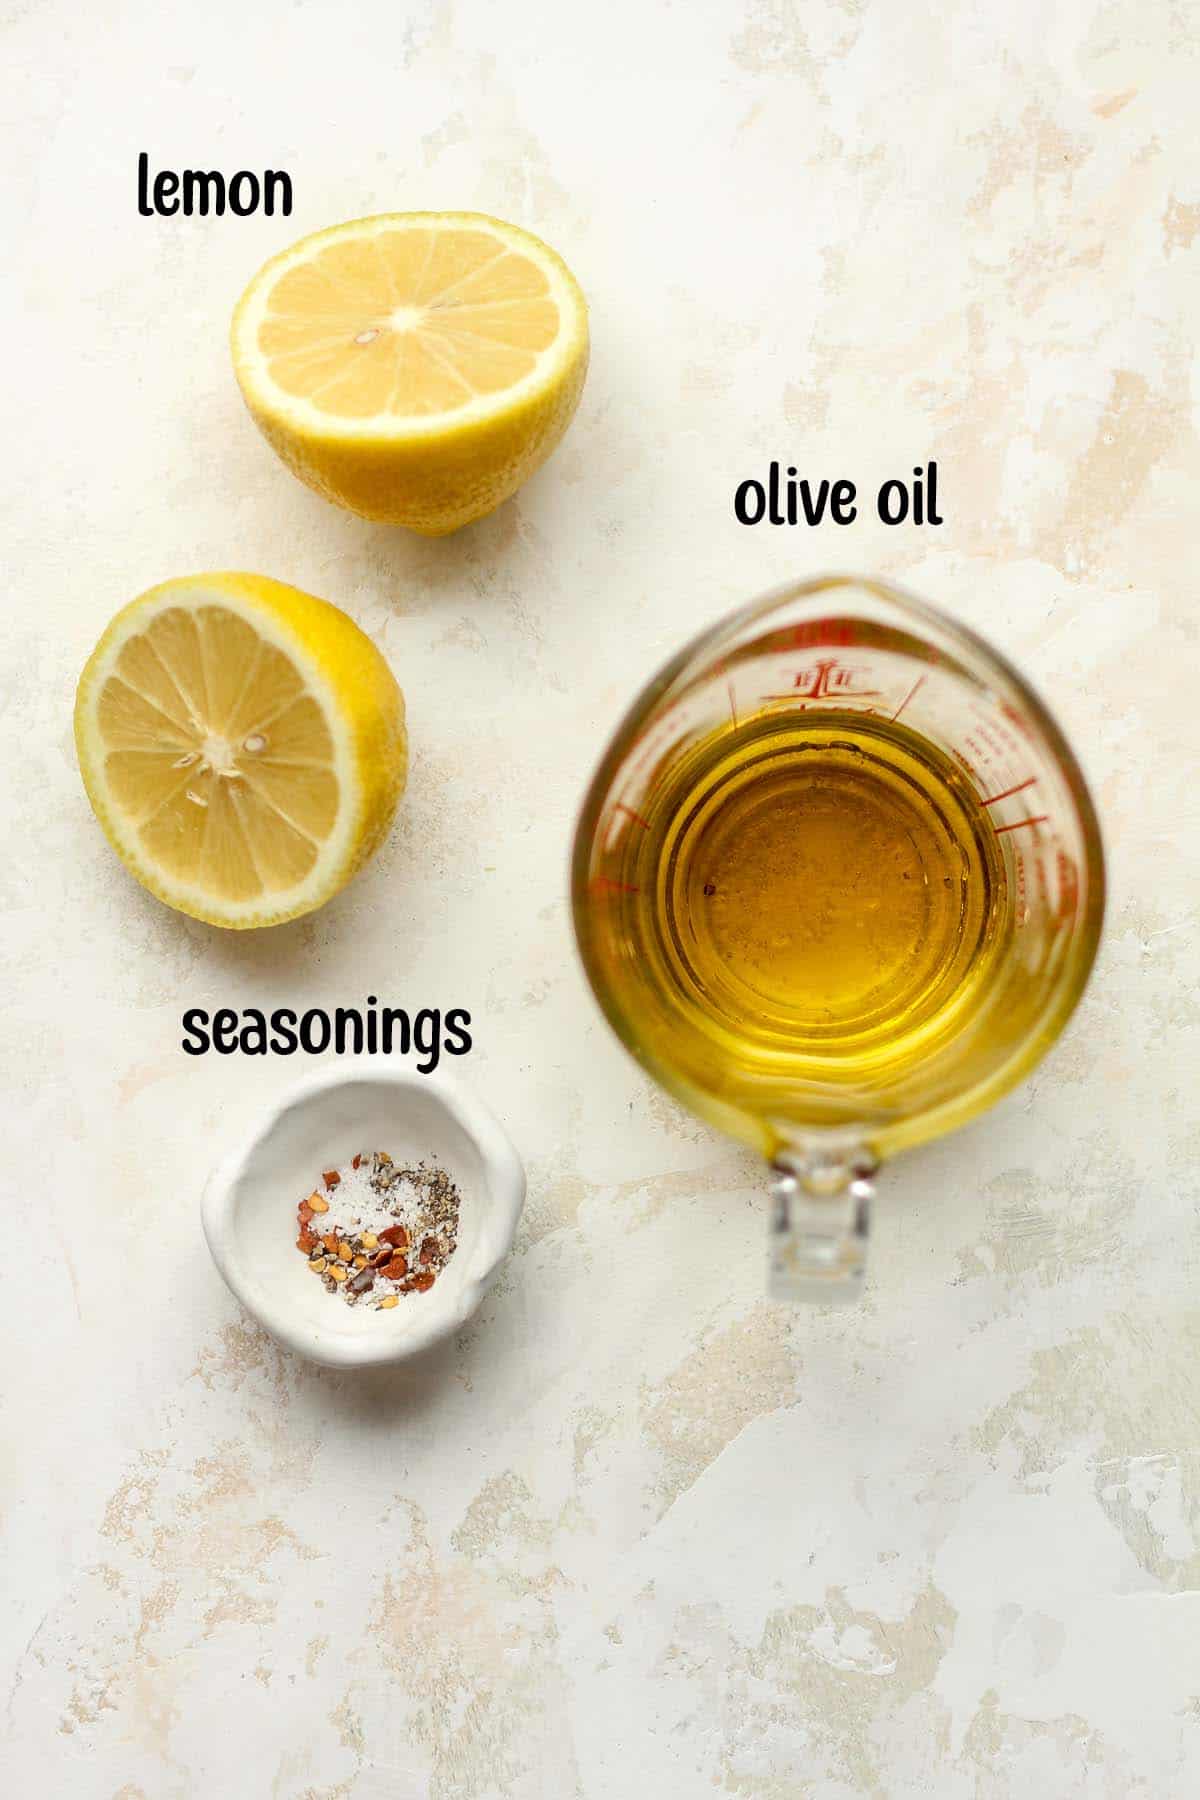 The lemon dressing ingredients.